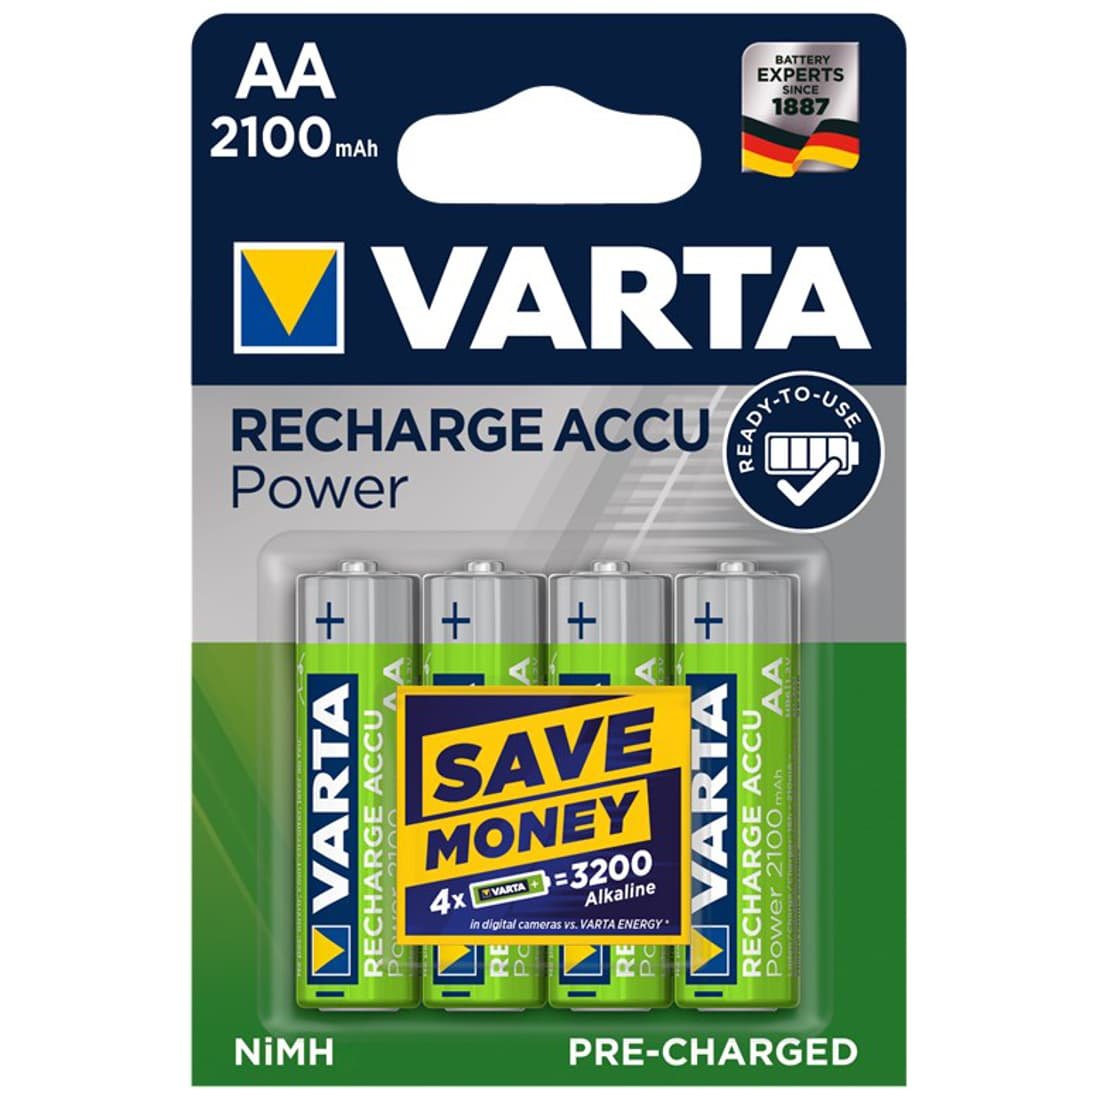 Se Varta Recharge Charge Accu Power Aa 2100mah 4 Pack (b) - Batteri hos PlusLED.dk